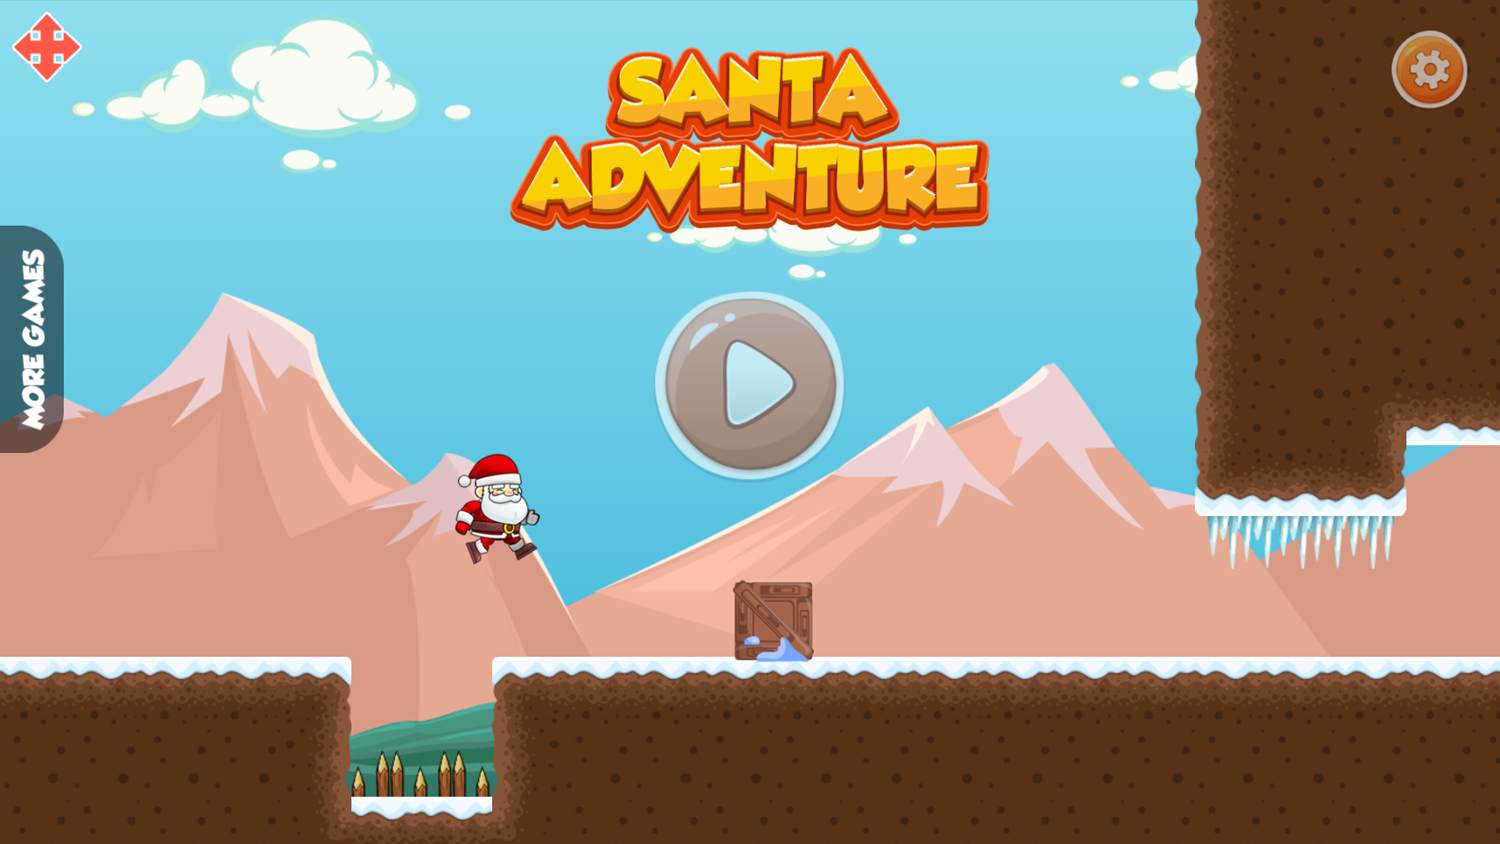 Santa's Adventure Game Welcome Screen Screenshot.